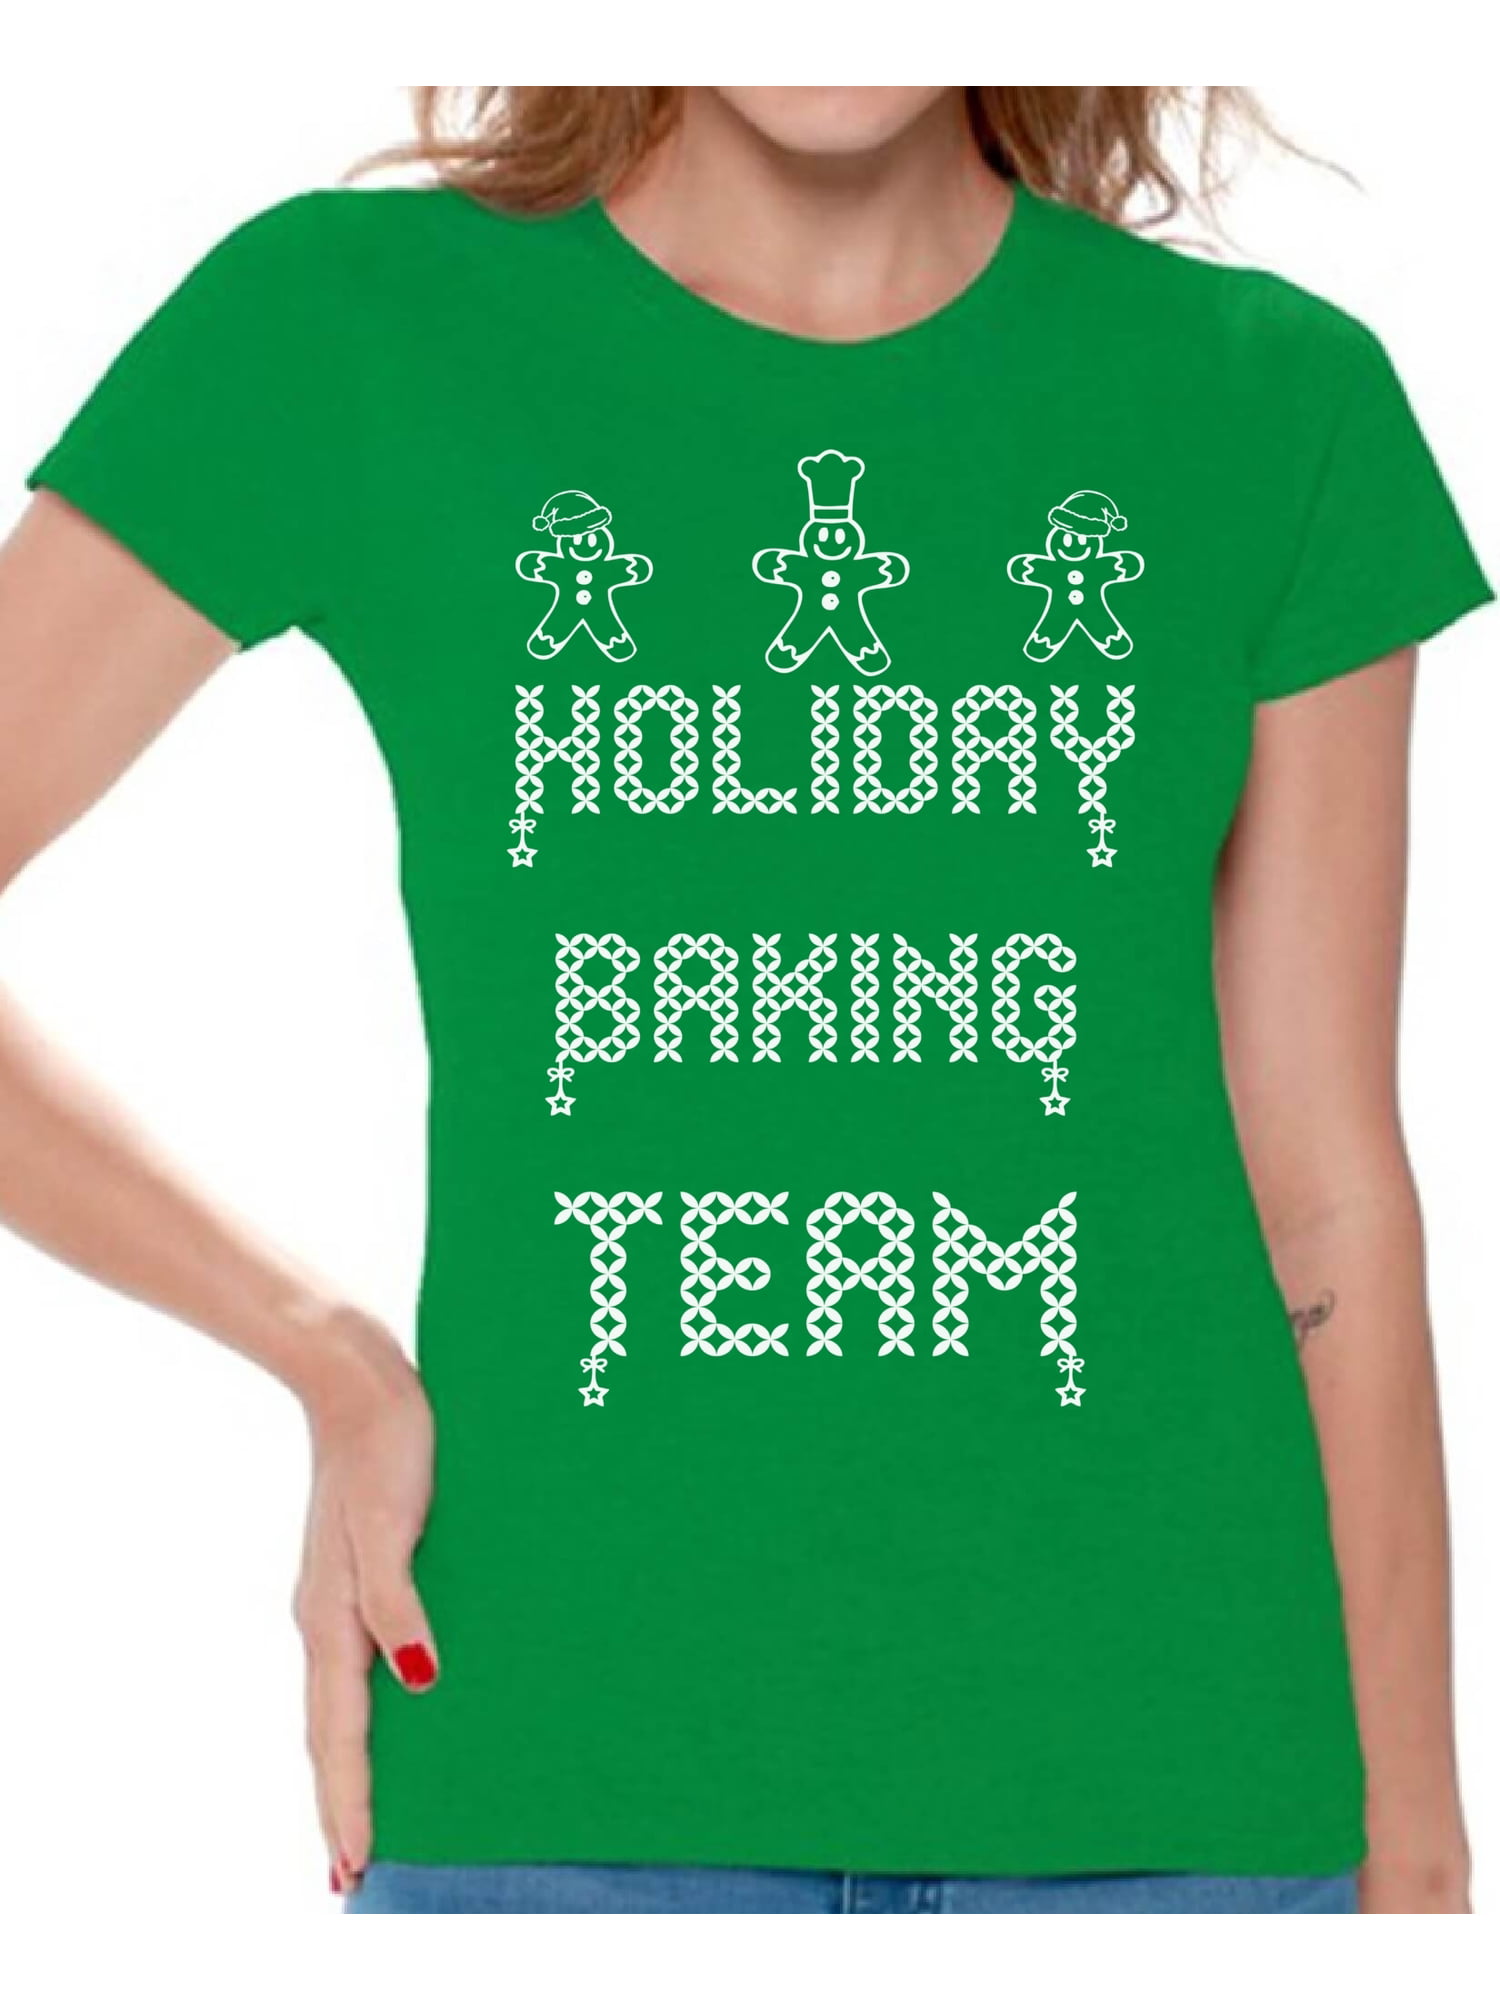 Awkward Styles Holiday Baking Team Shirt Thanksgiving Shirts for Women ...